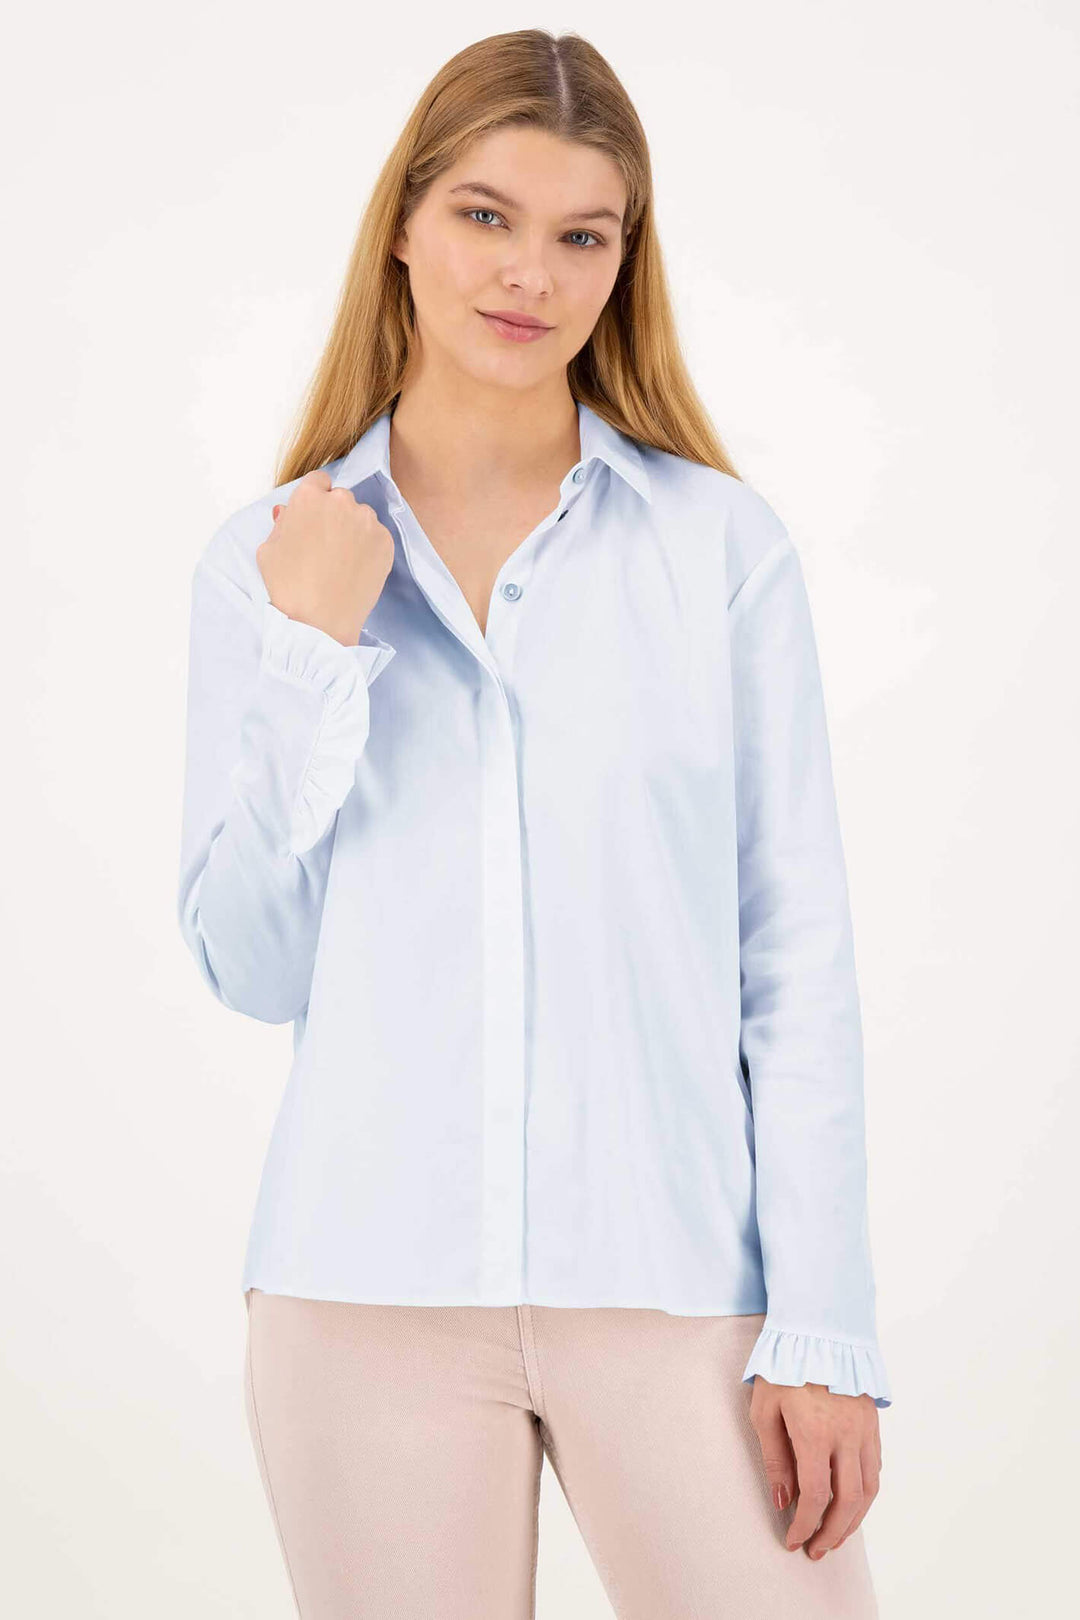 Just White J2308 Light Blue Shirt - Experience Boutique